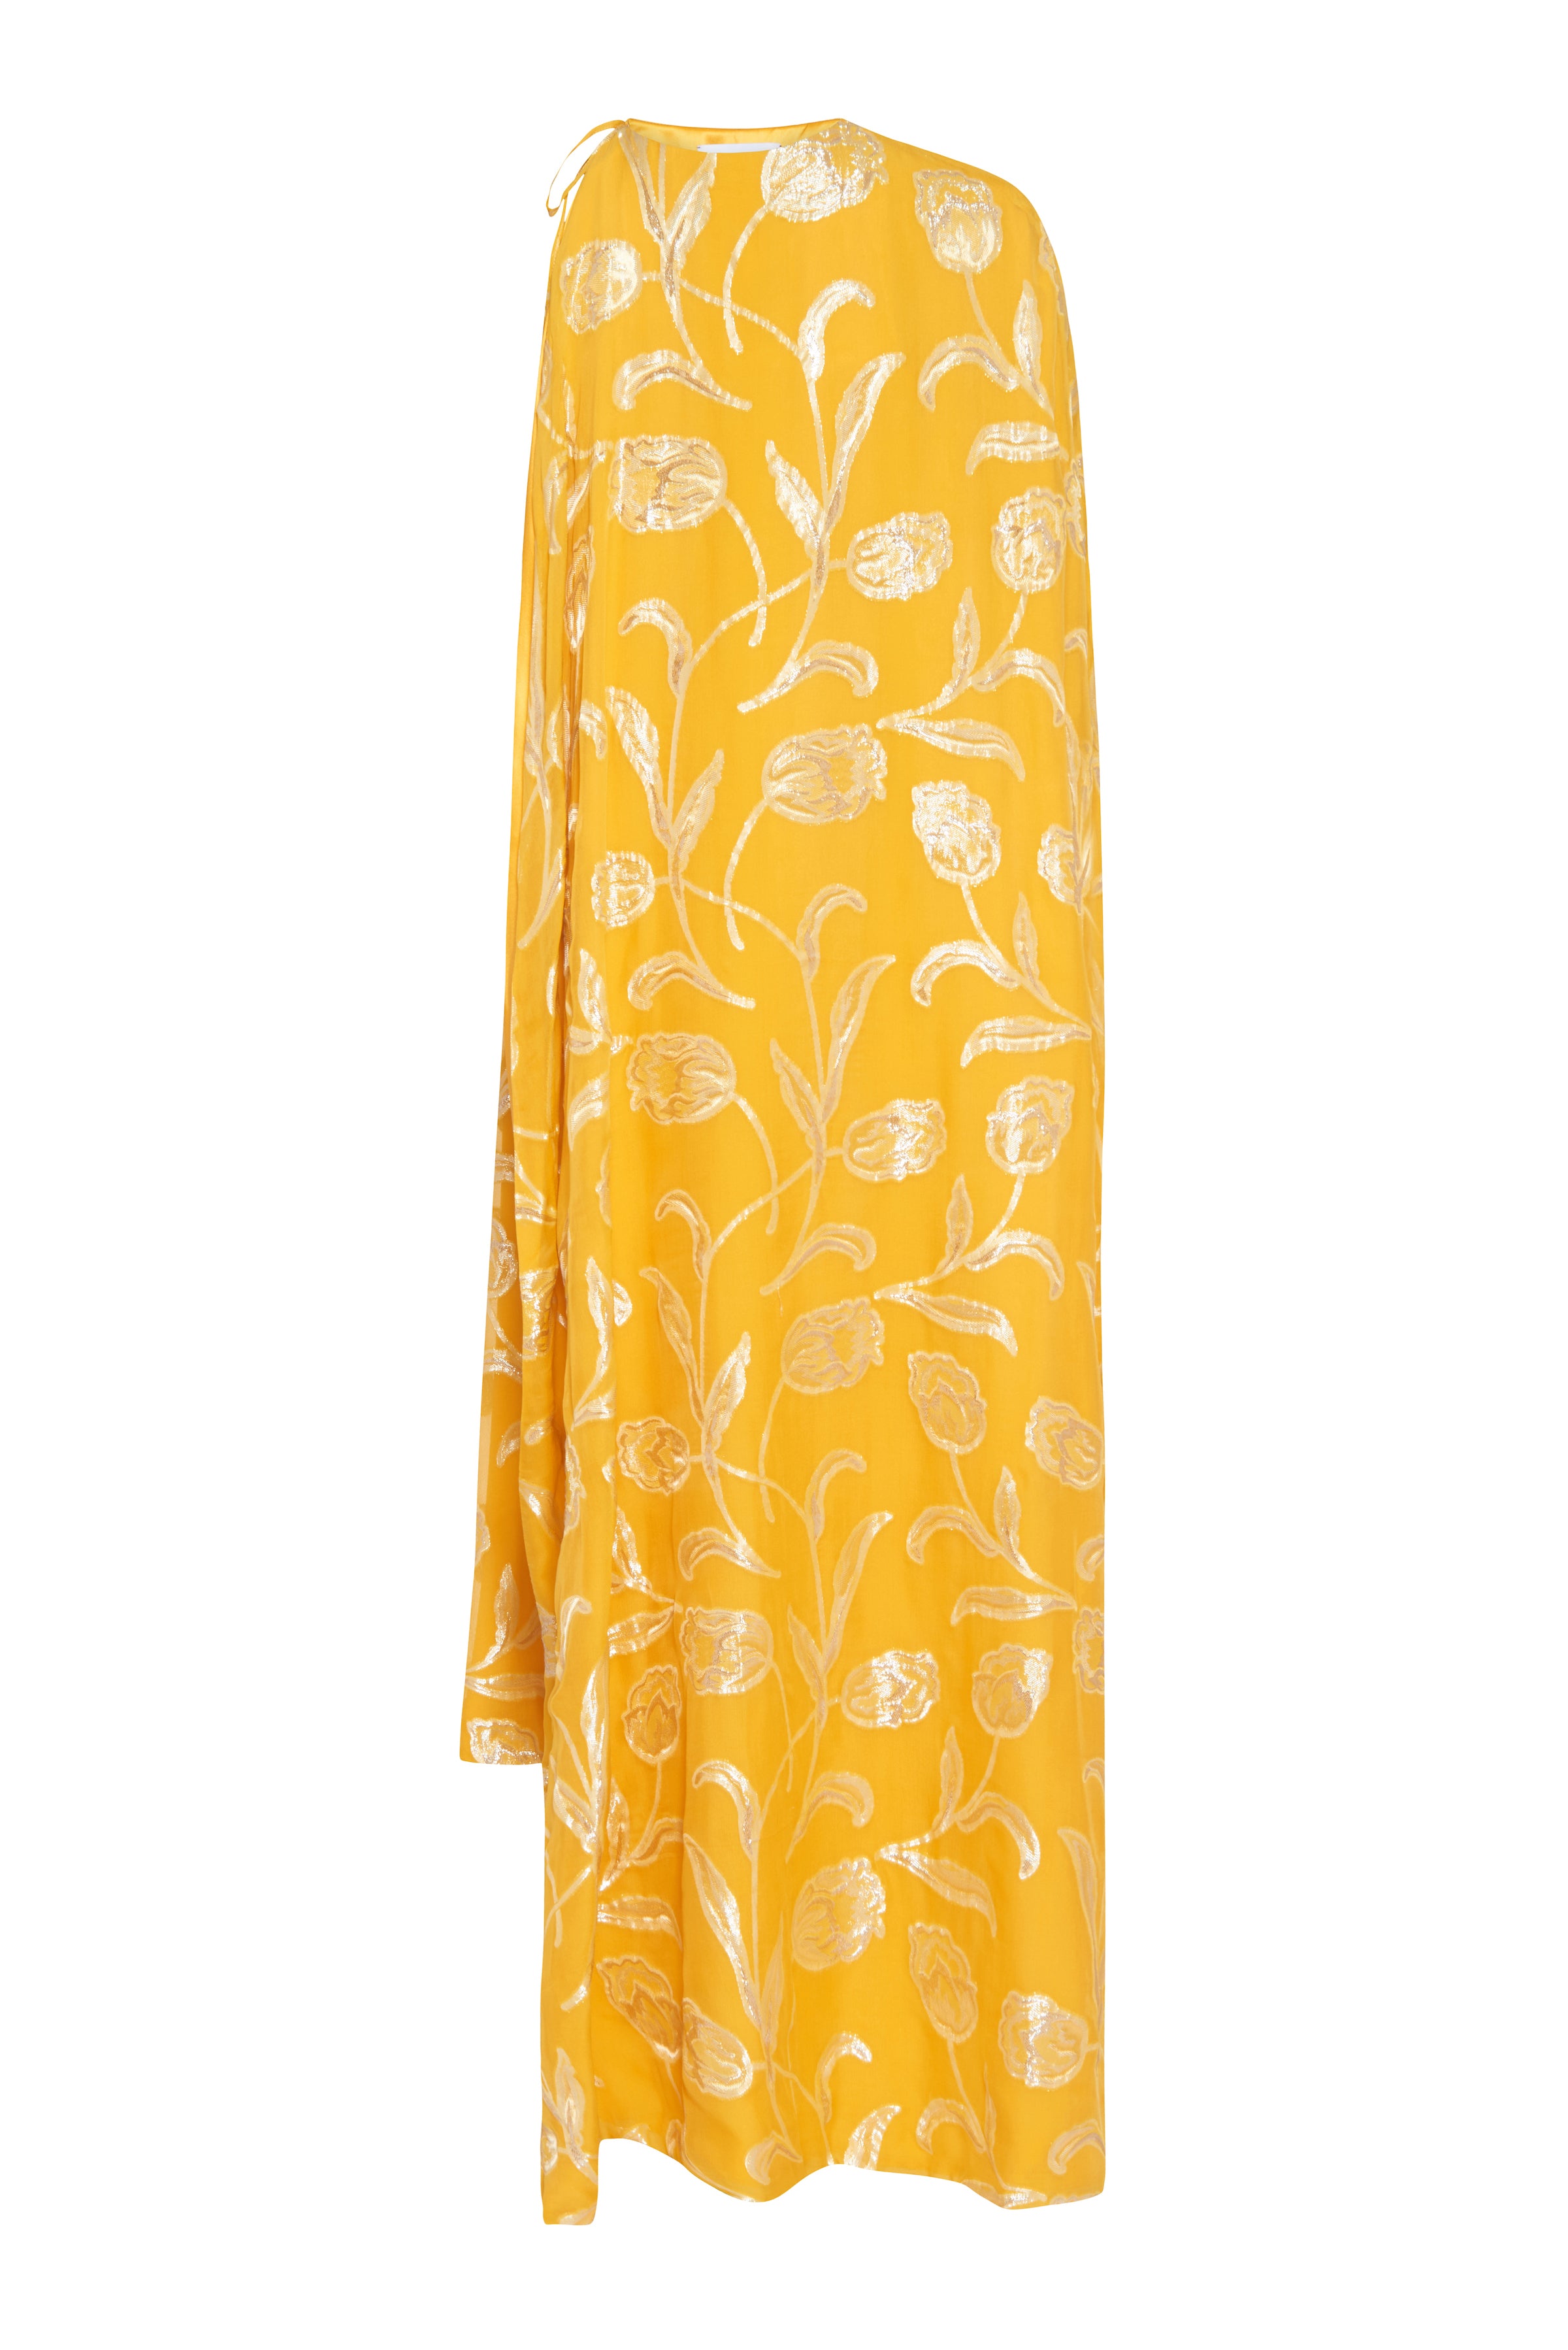 Kennedy Yellow Cape Dress